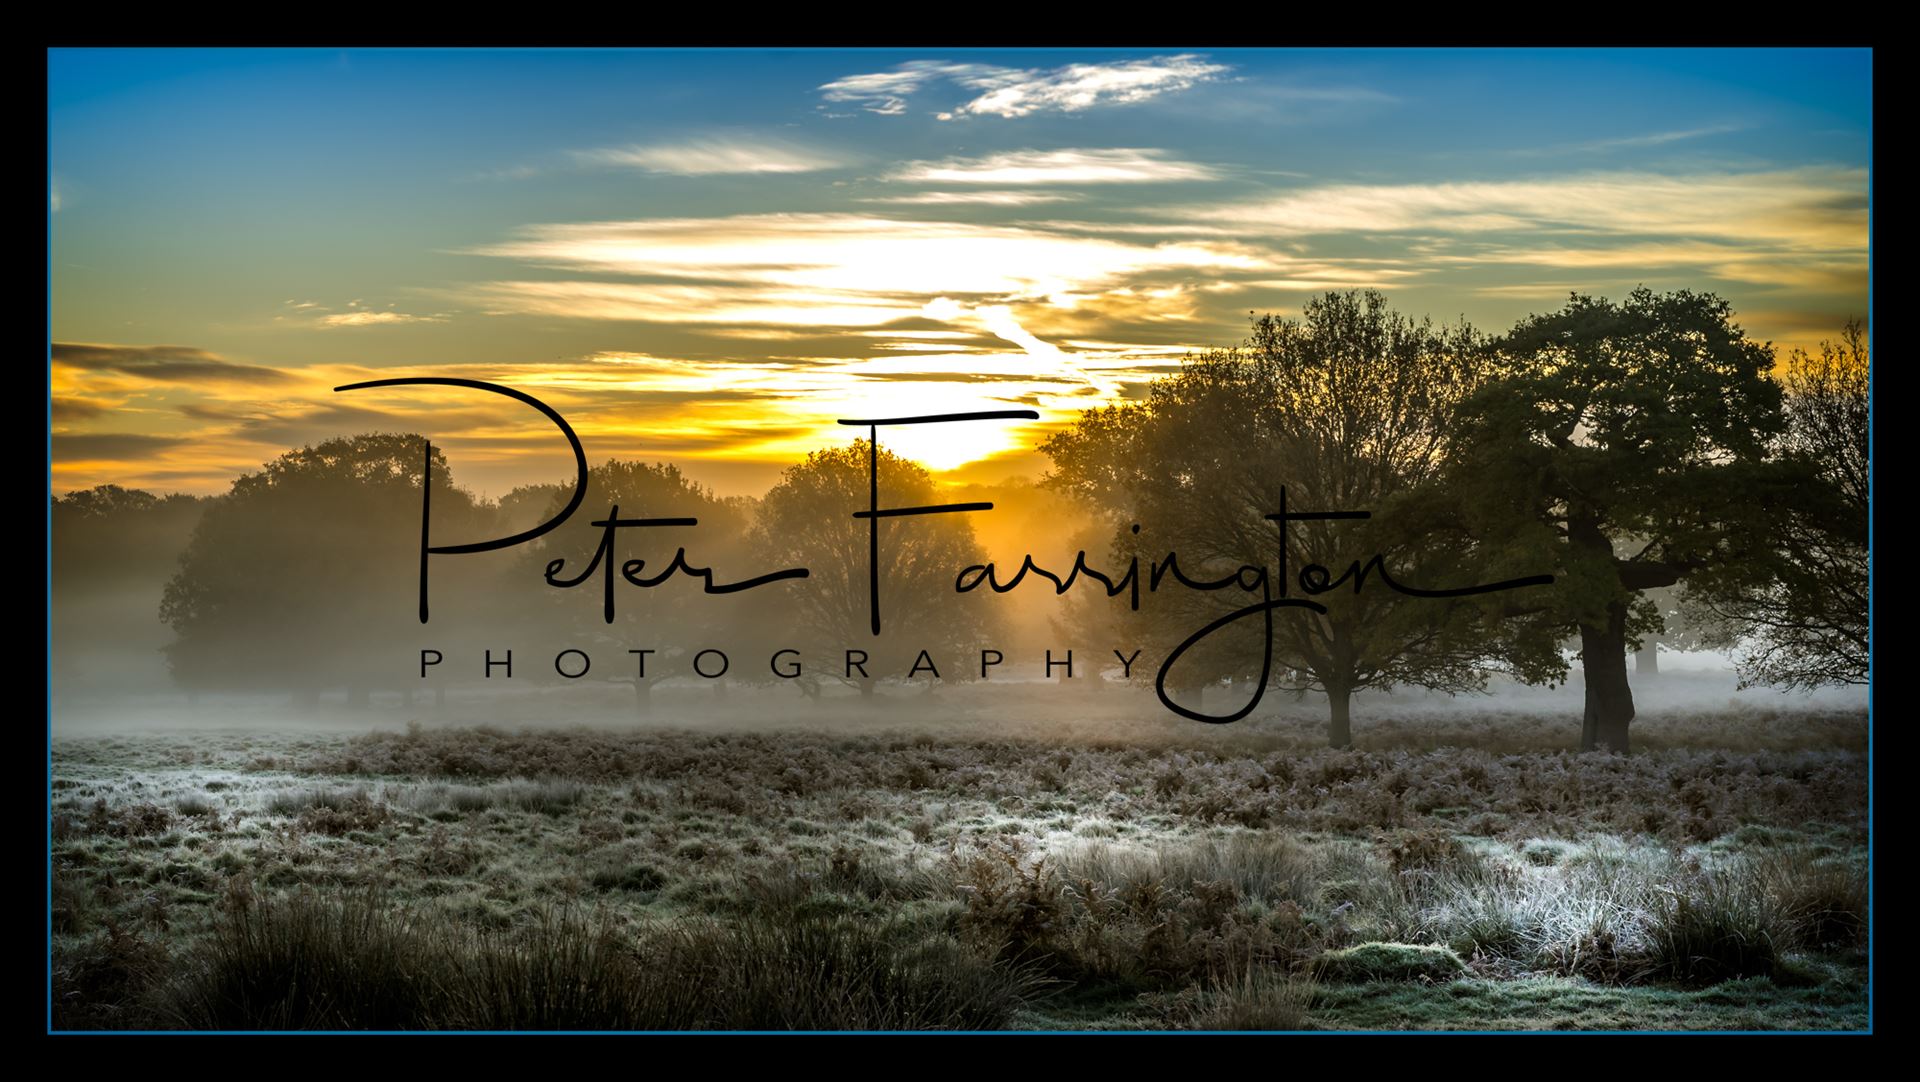 DSC00578-Edit.jpg  by Peter farrington photography